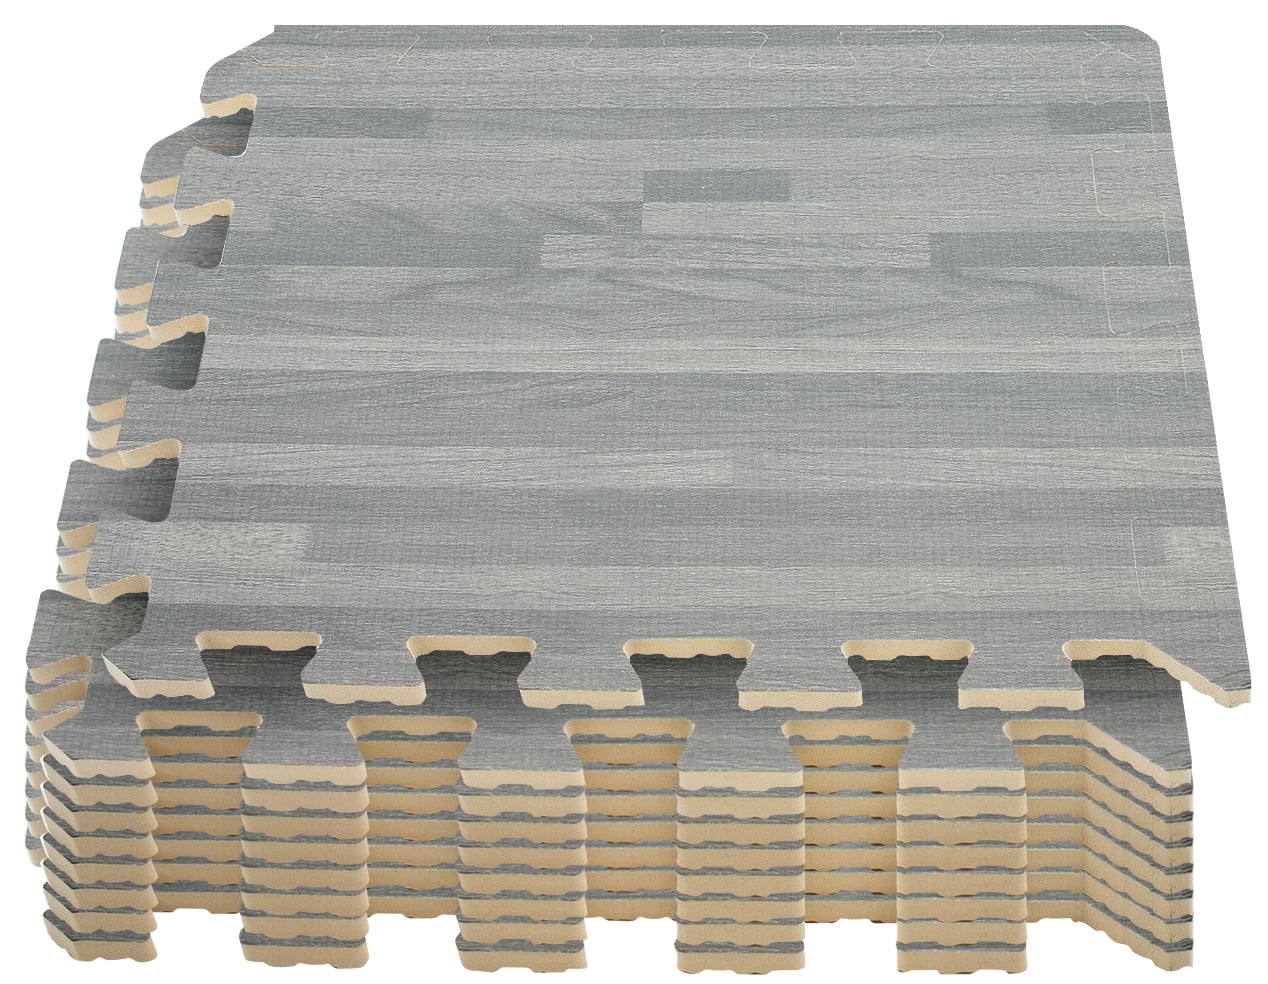 DYNWAVE Set of 18 Pieces Interlocking Floor Tiles Wood Effect Soft Foam Mats Play/Garage/Gym Protective Flooring 